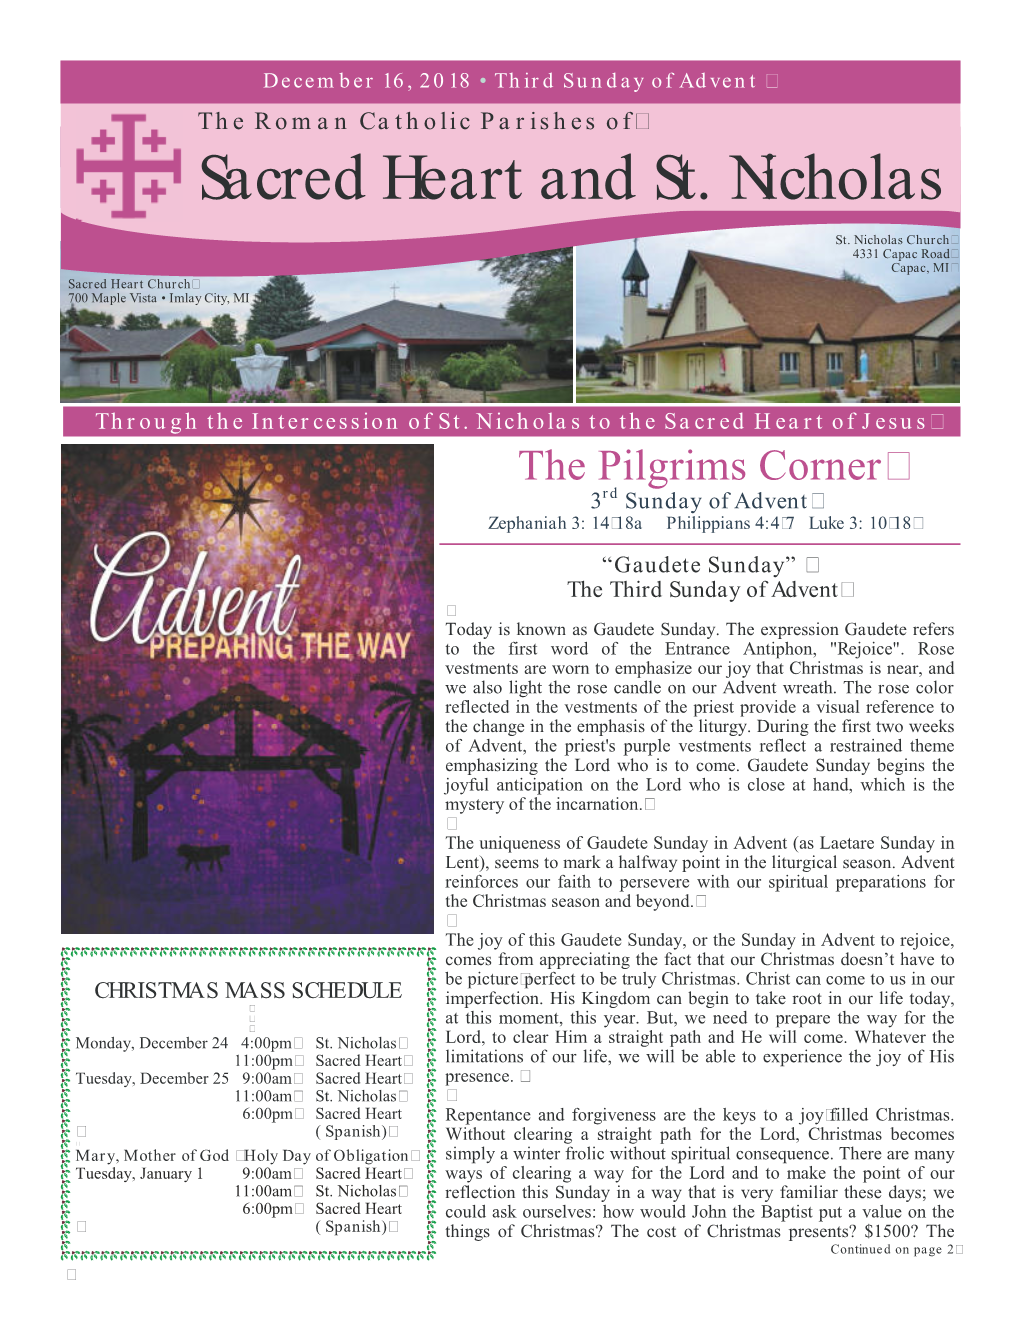 Sacred Heart and St. Nicholas